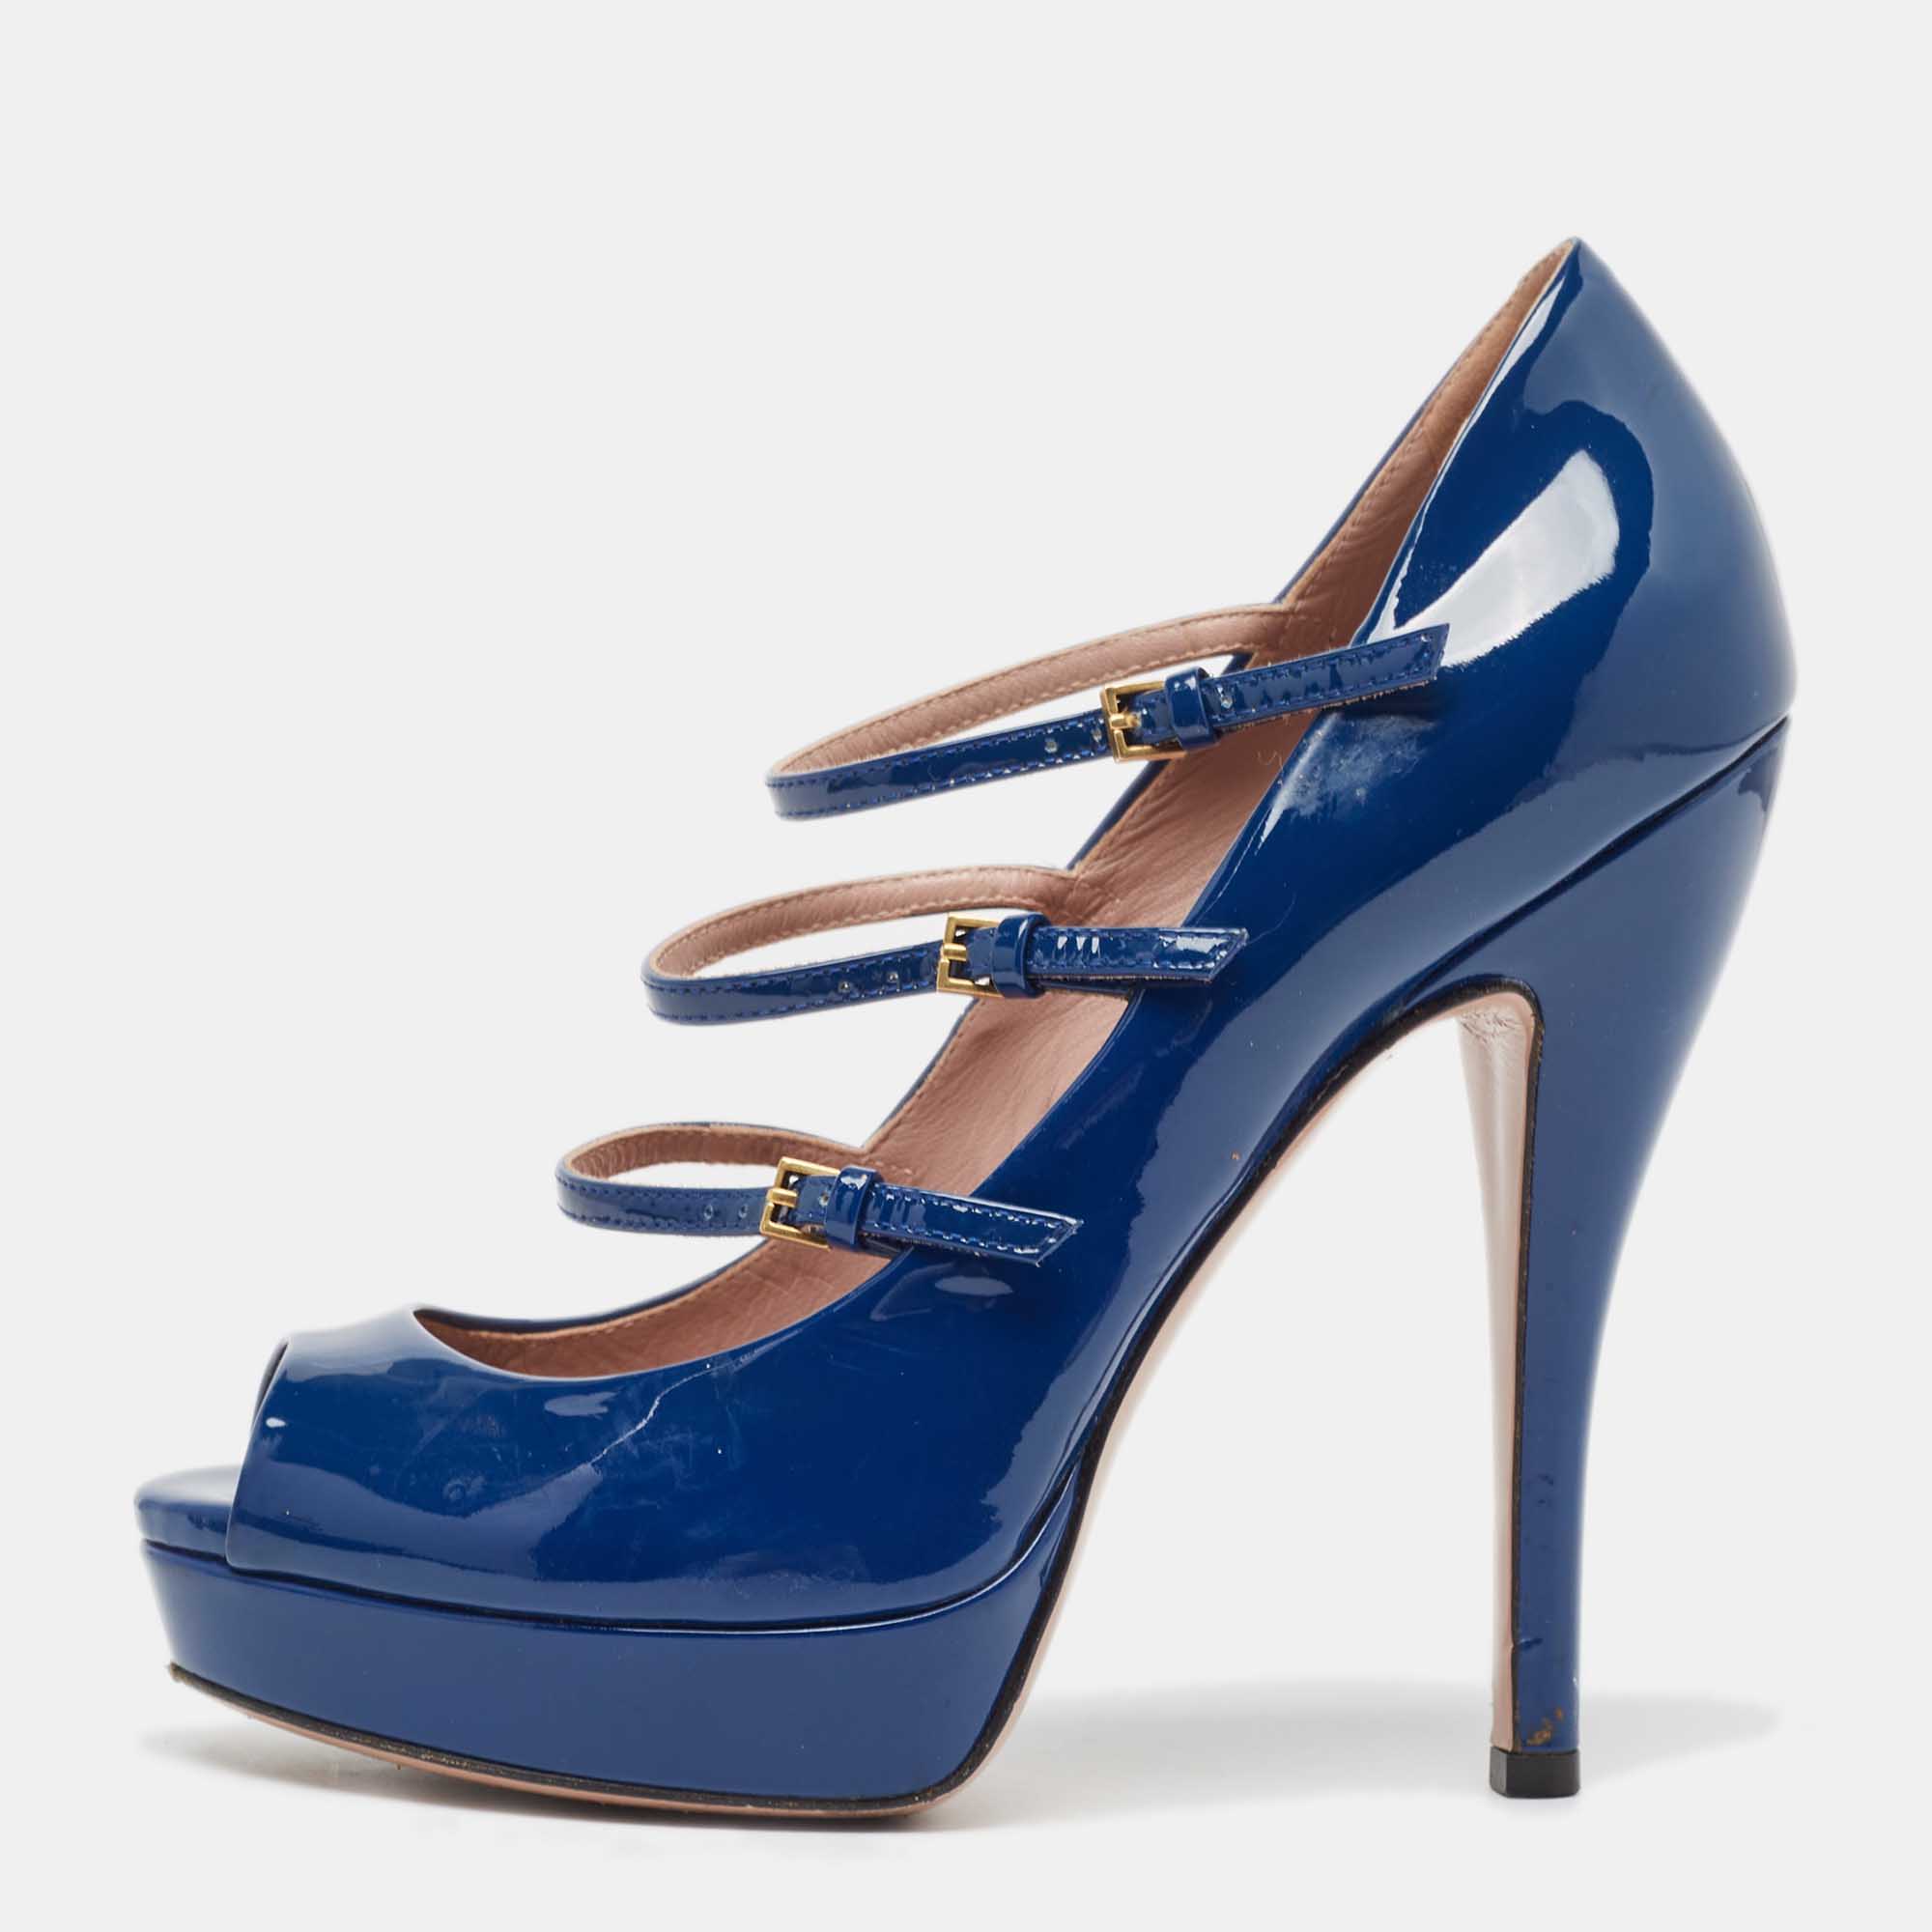 Gucci blue patent leather lisbeth pumps size 37.5